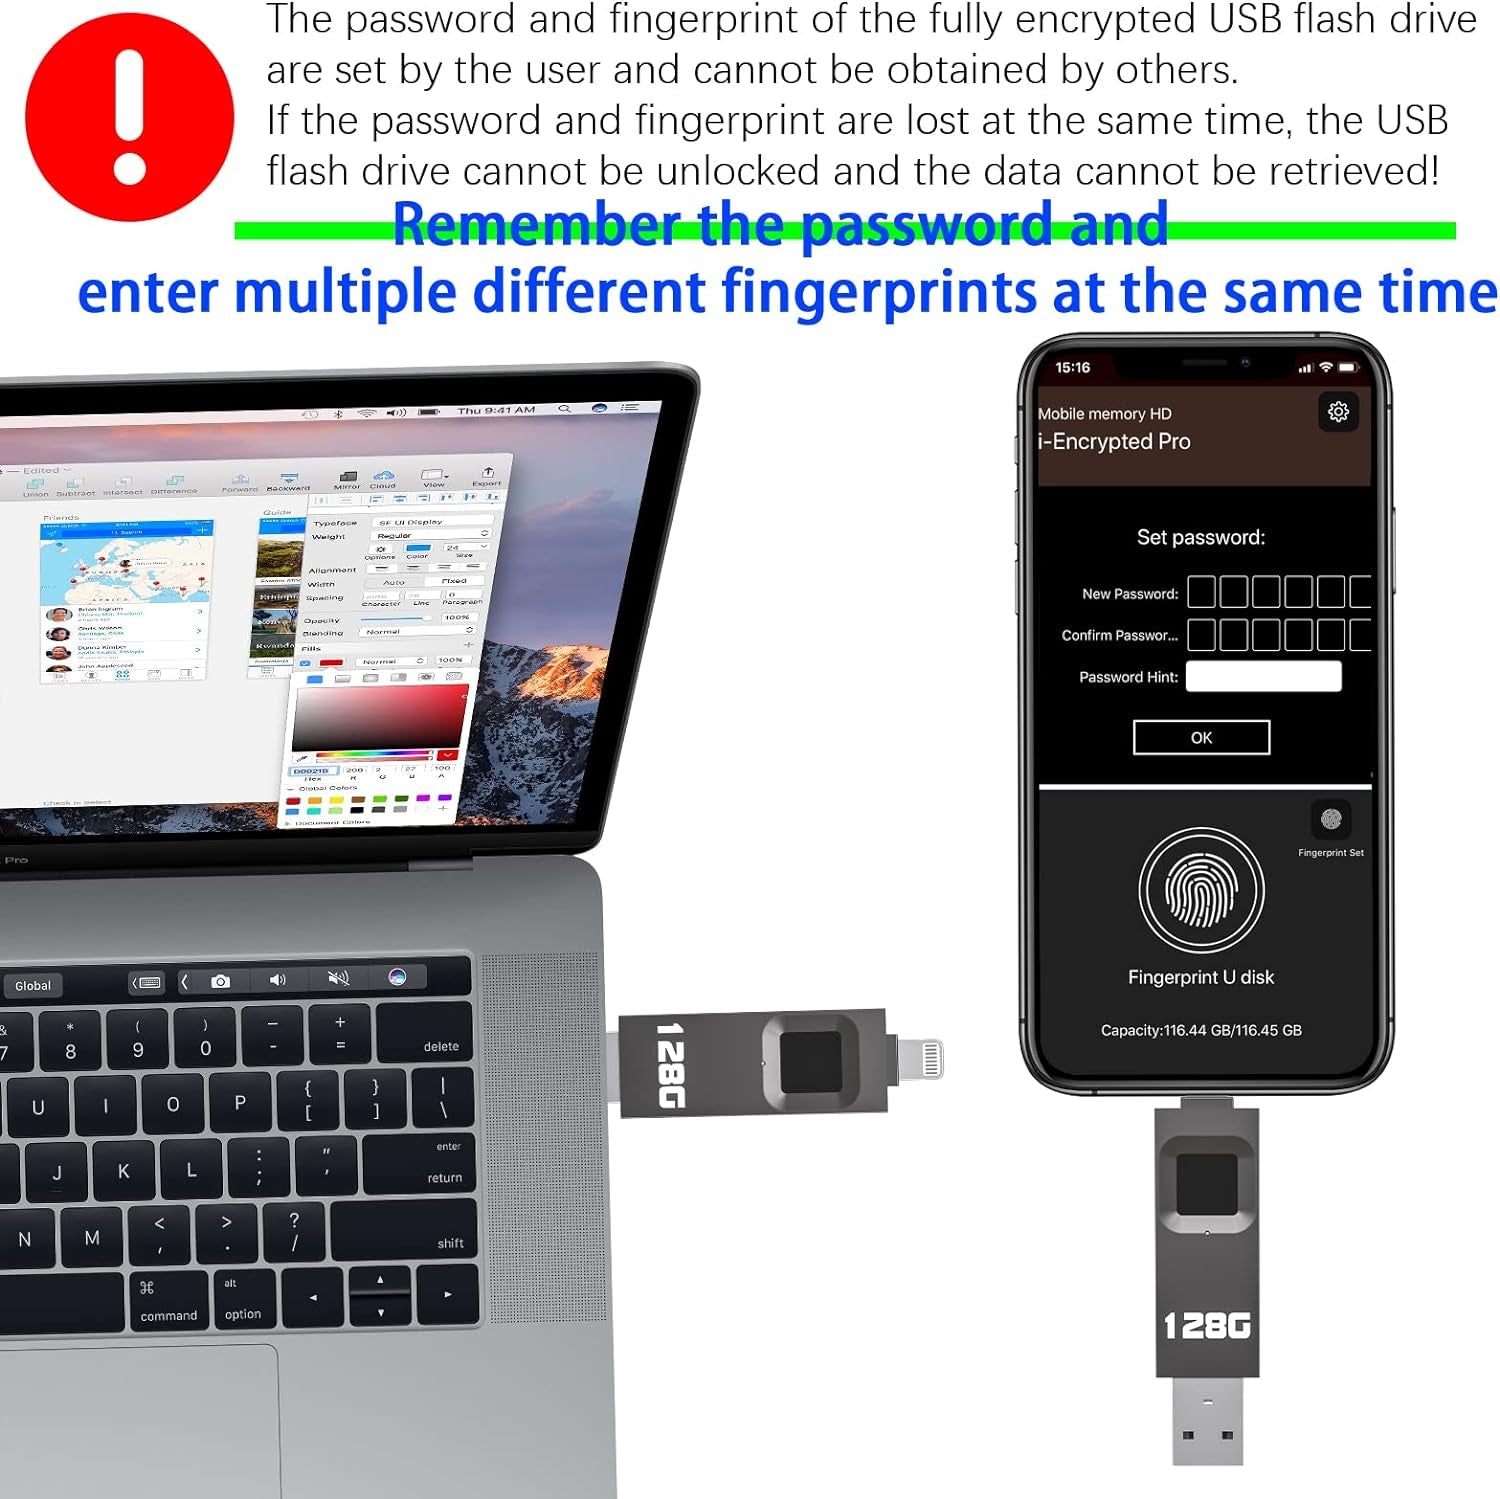 128GB Encrypted USB Drive,Fingerprint Flash Drive,Secure Password Protected U Disk, USB Memory Stick, USB Thumb Drive,Encryption Storage for Iphone/Ipad/Ipadmini/Mac/Pc